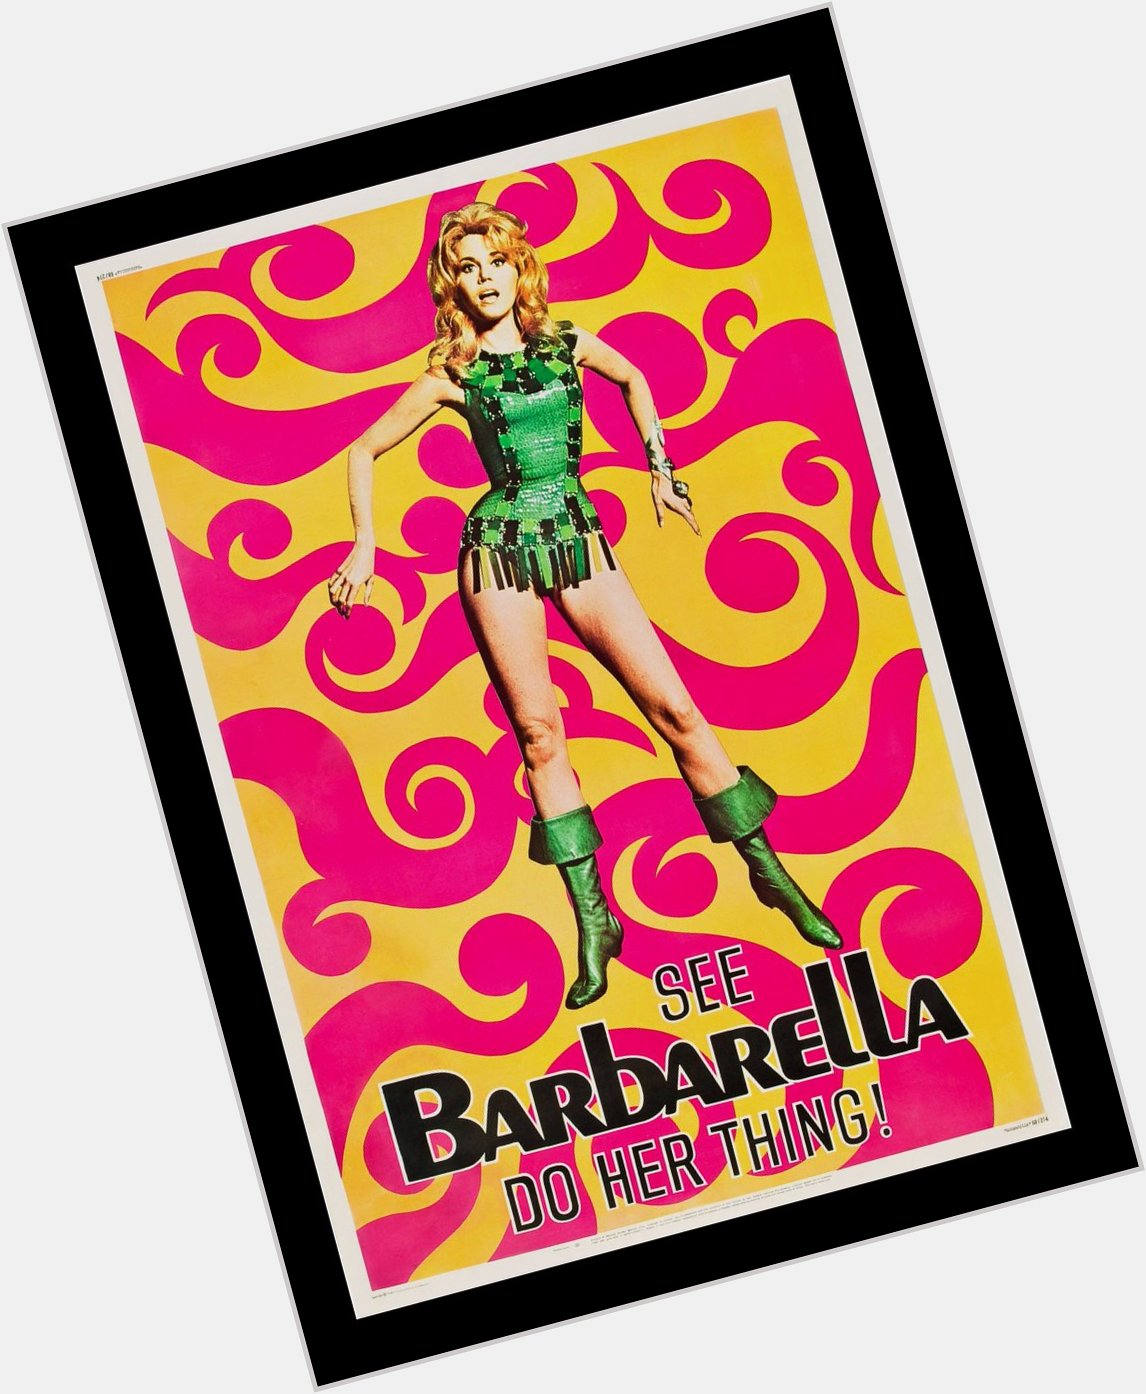  BARBARELLA
Psychedella 
Happy birthday
Jane Fonda 